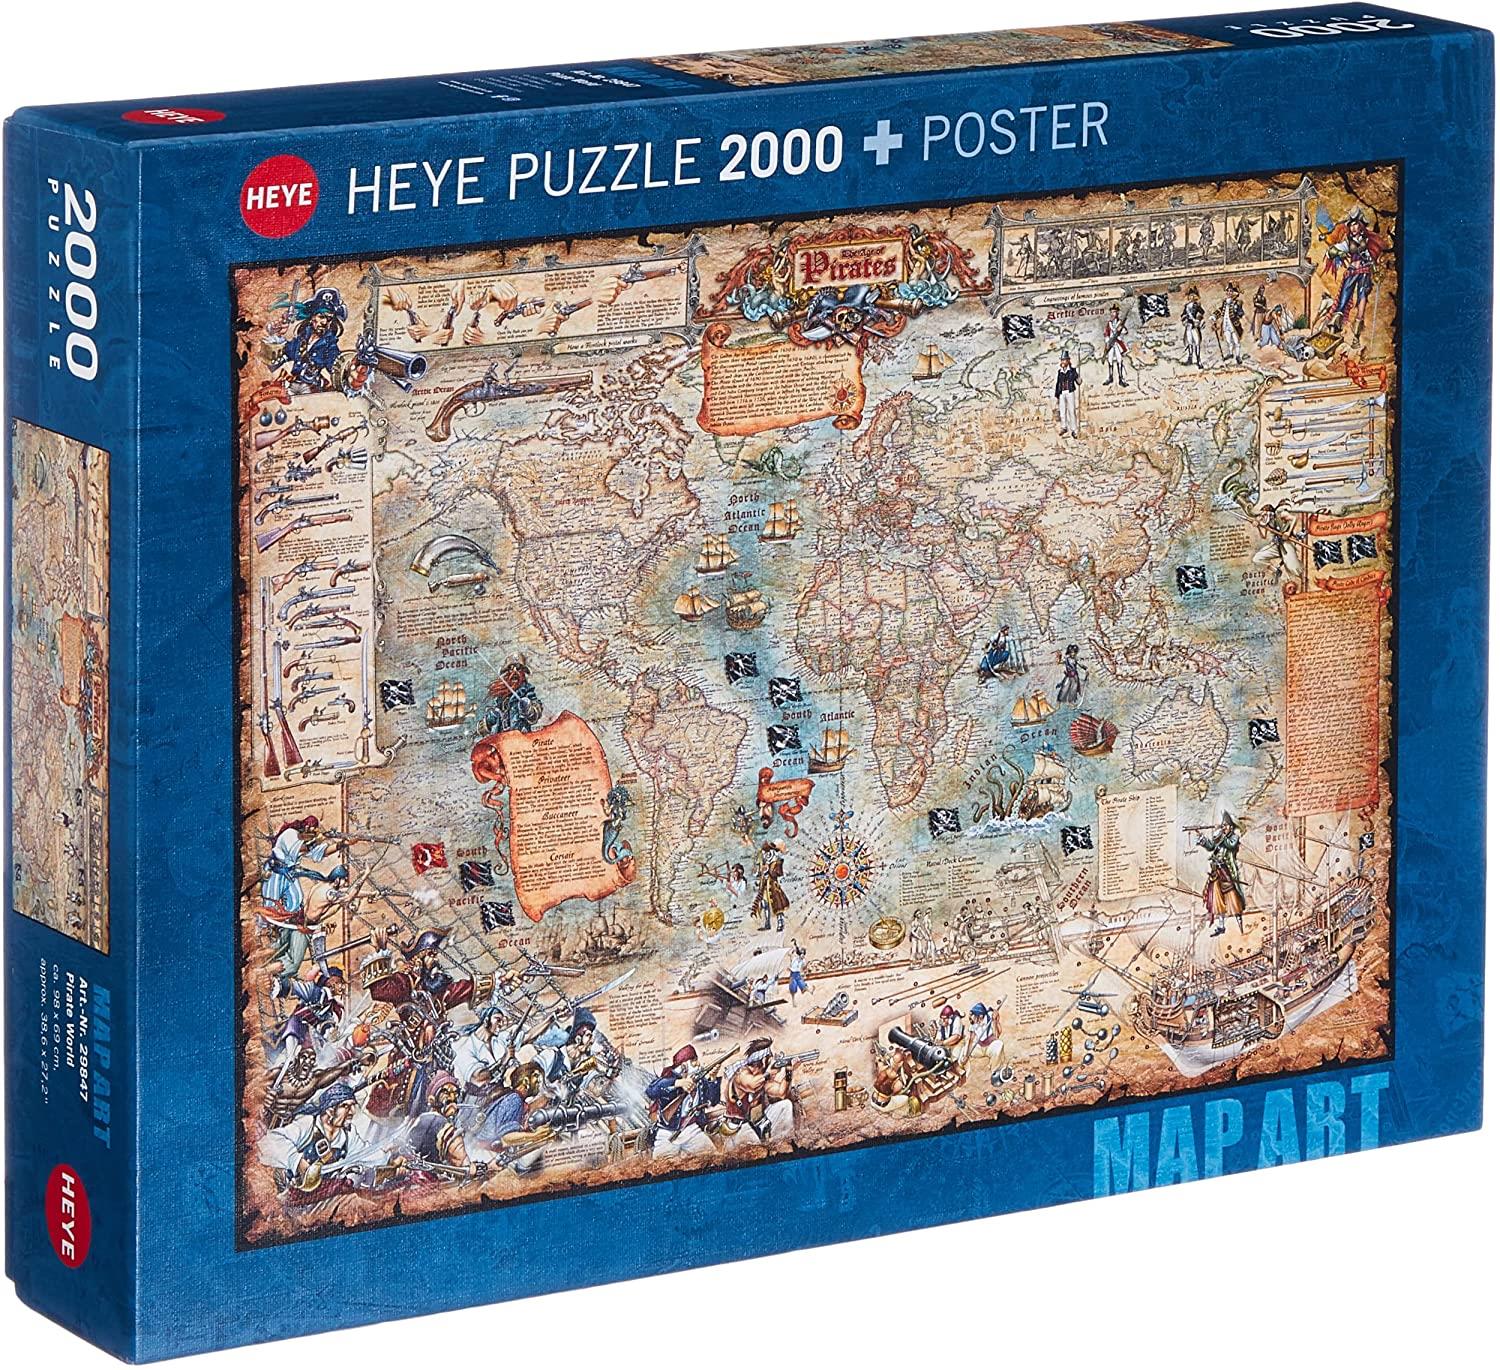 Heye Pirate World Map Art Jigsaw Puzzle (2000 Pieces)